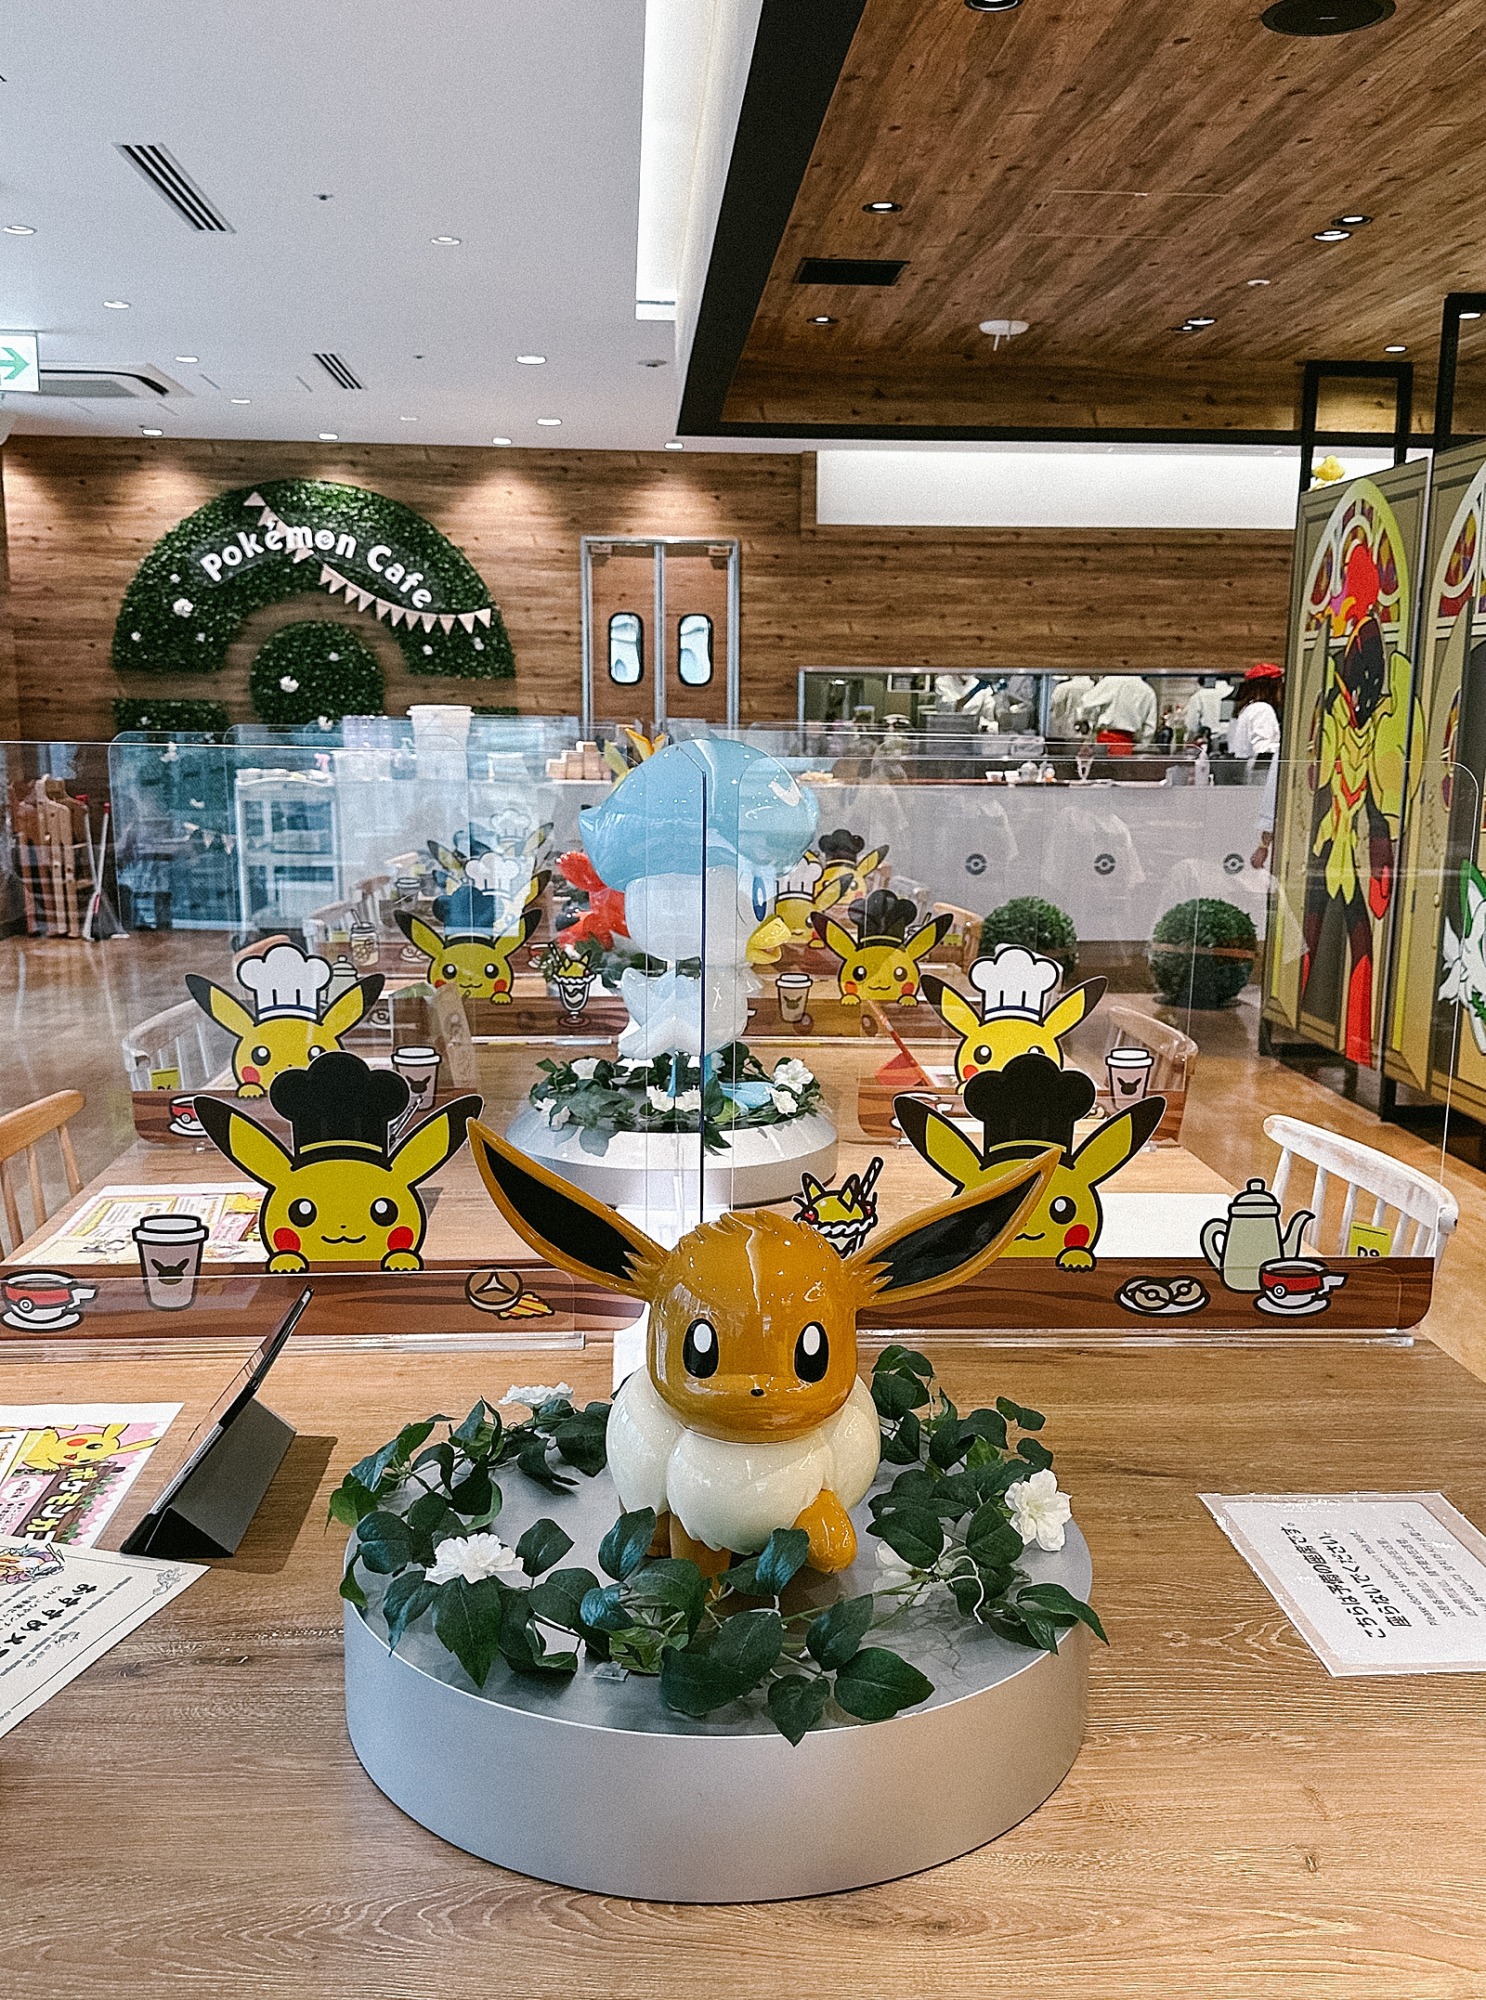 My Trip to Japan: Pokemon